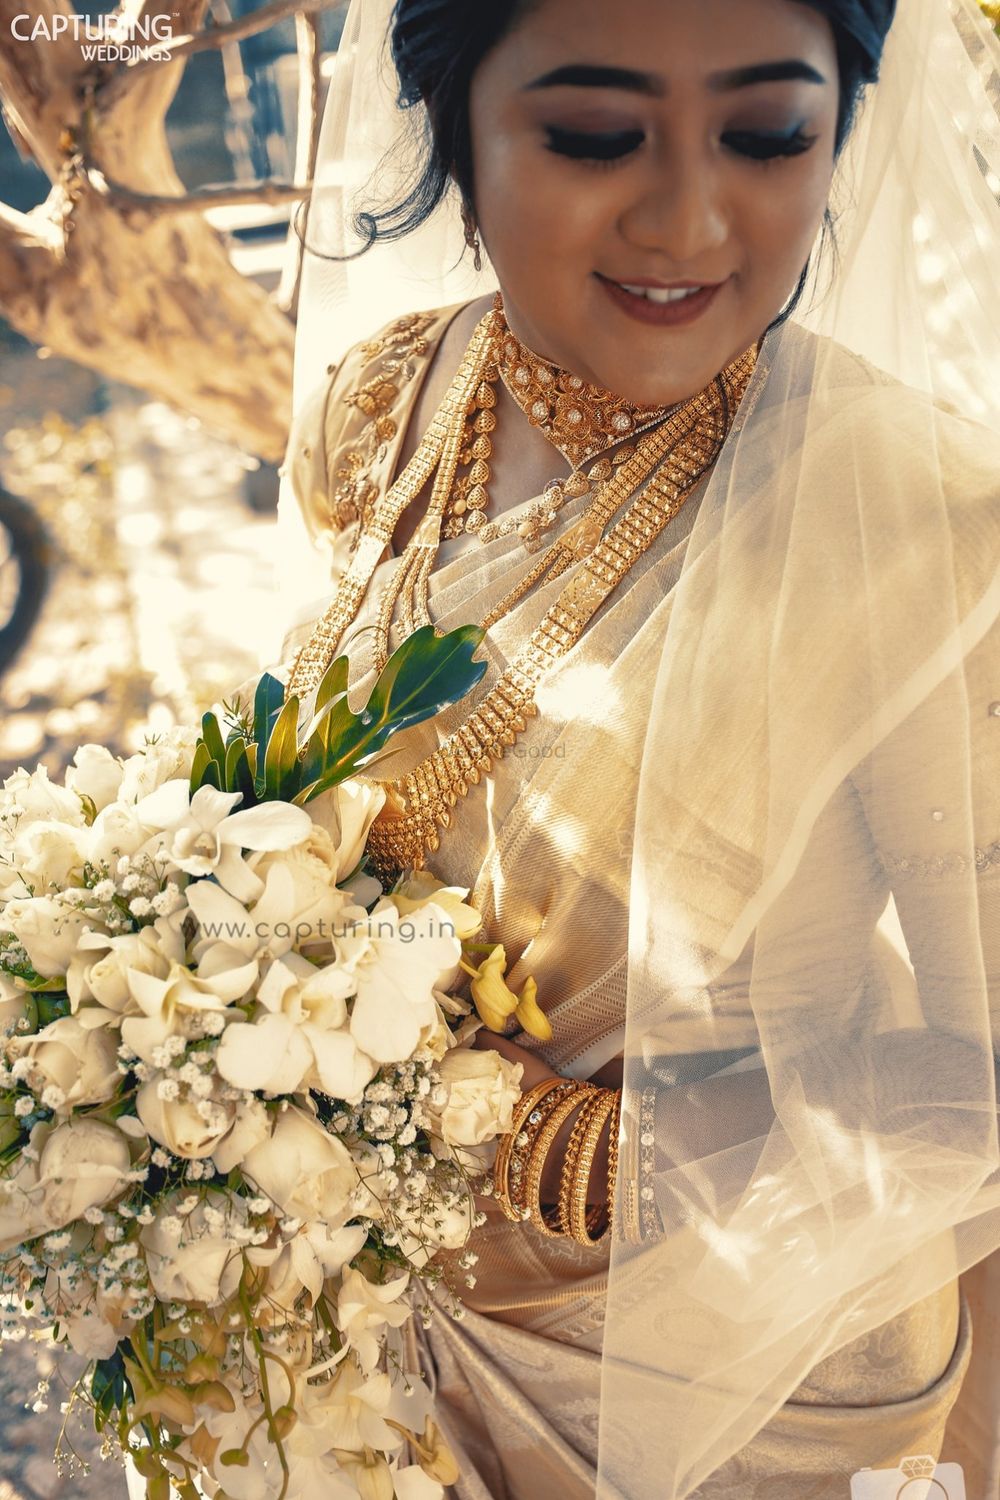 Photo By Capturing Weddings - Photographers